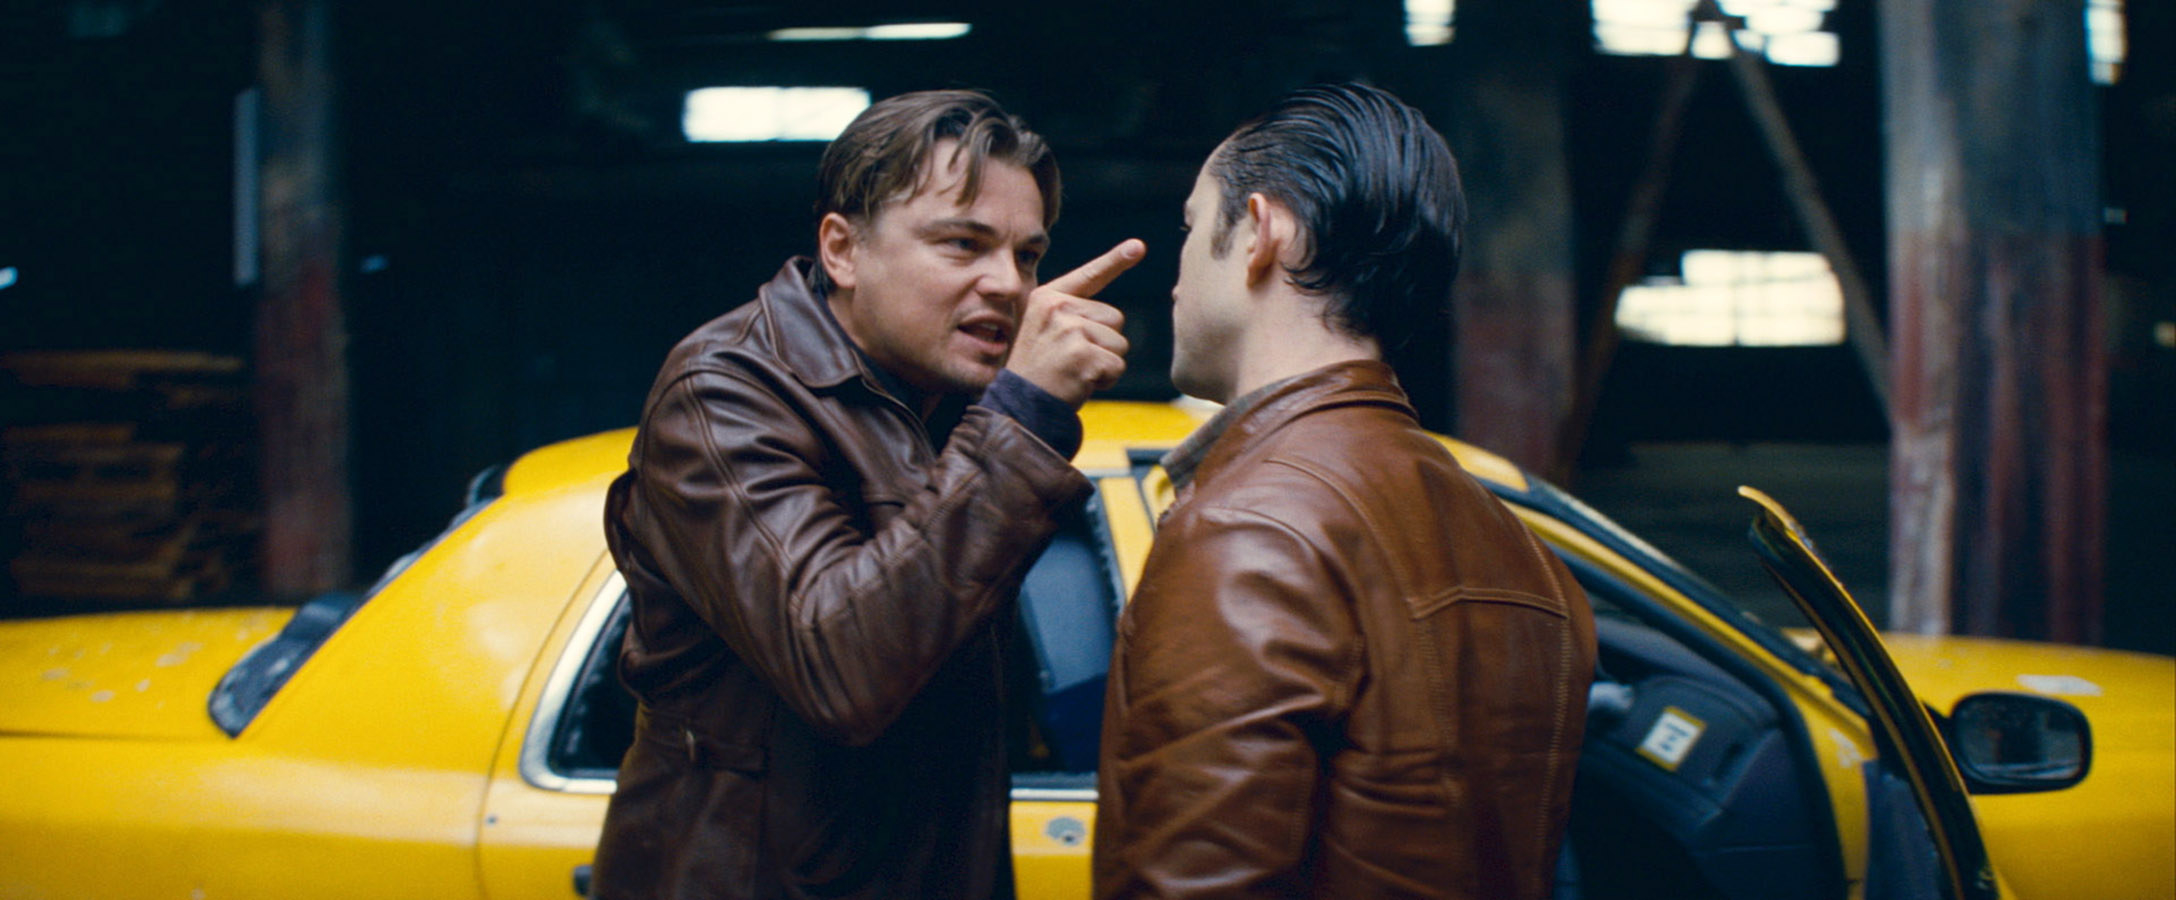 Leonardo DiCaprio yells at Joseph Gordon-Levitt